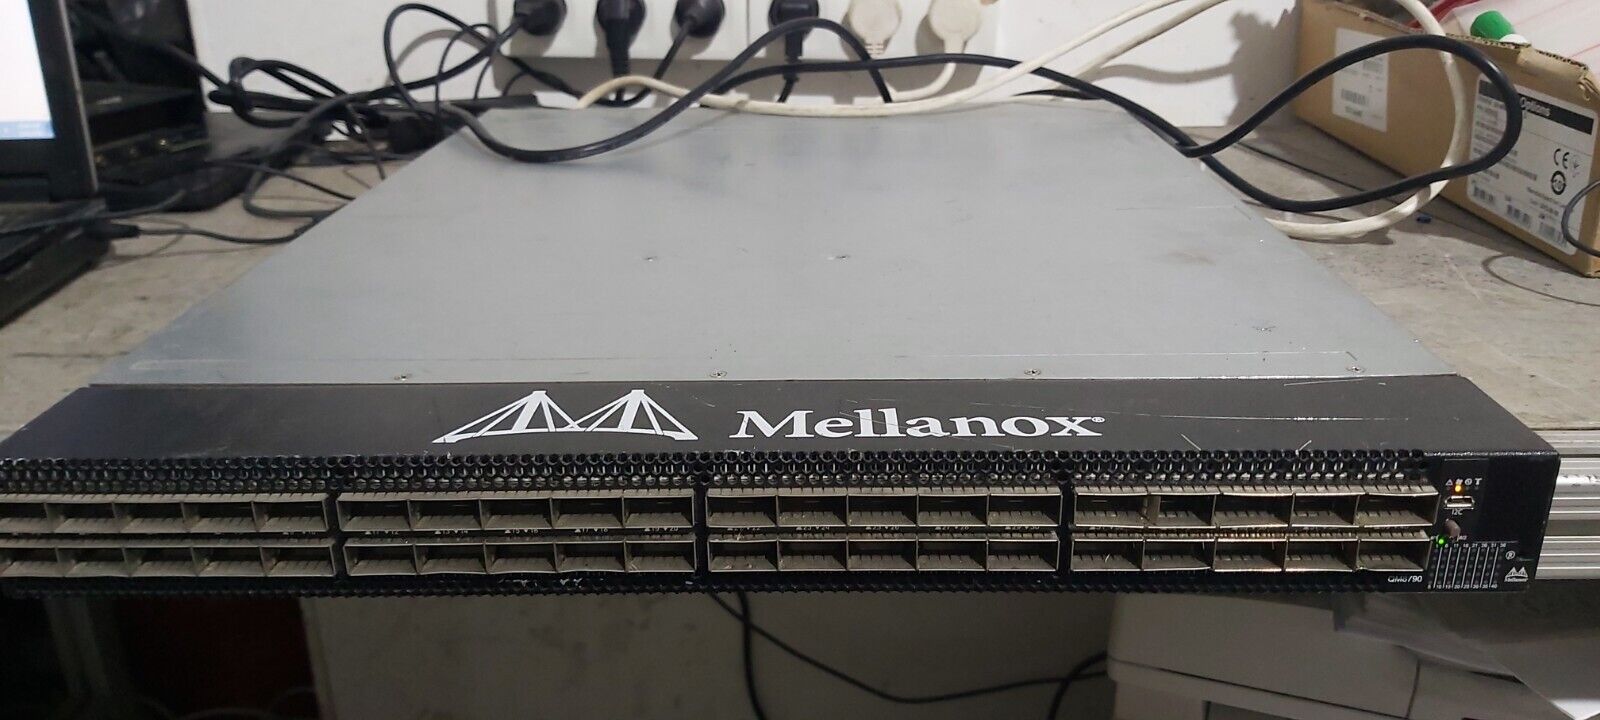 Mellanox NVidia QM8790 InfiniBand Switch Make Offers UPS Shipping